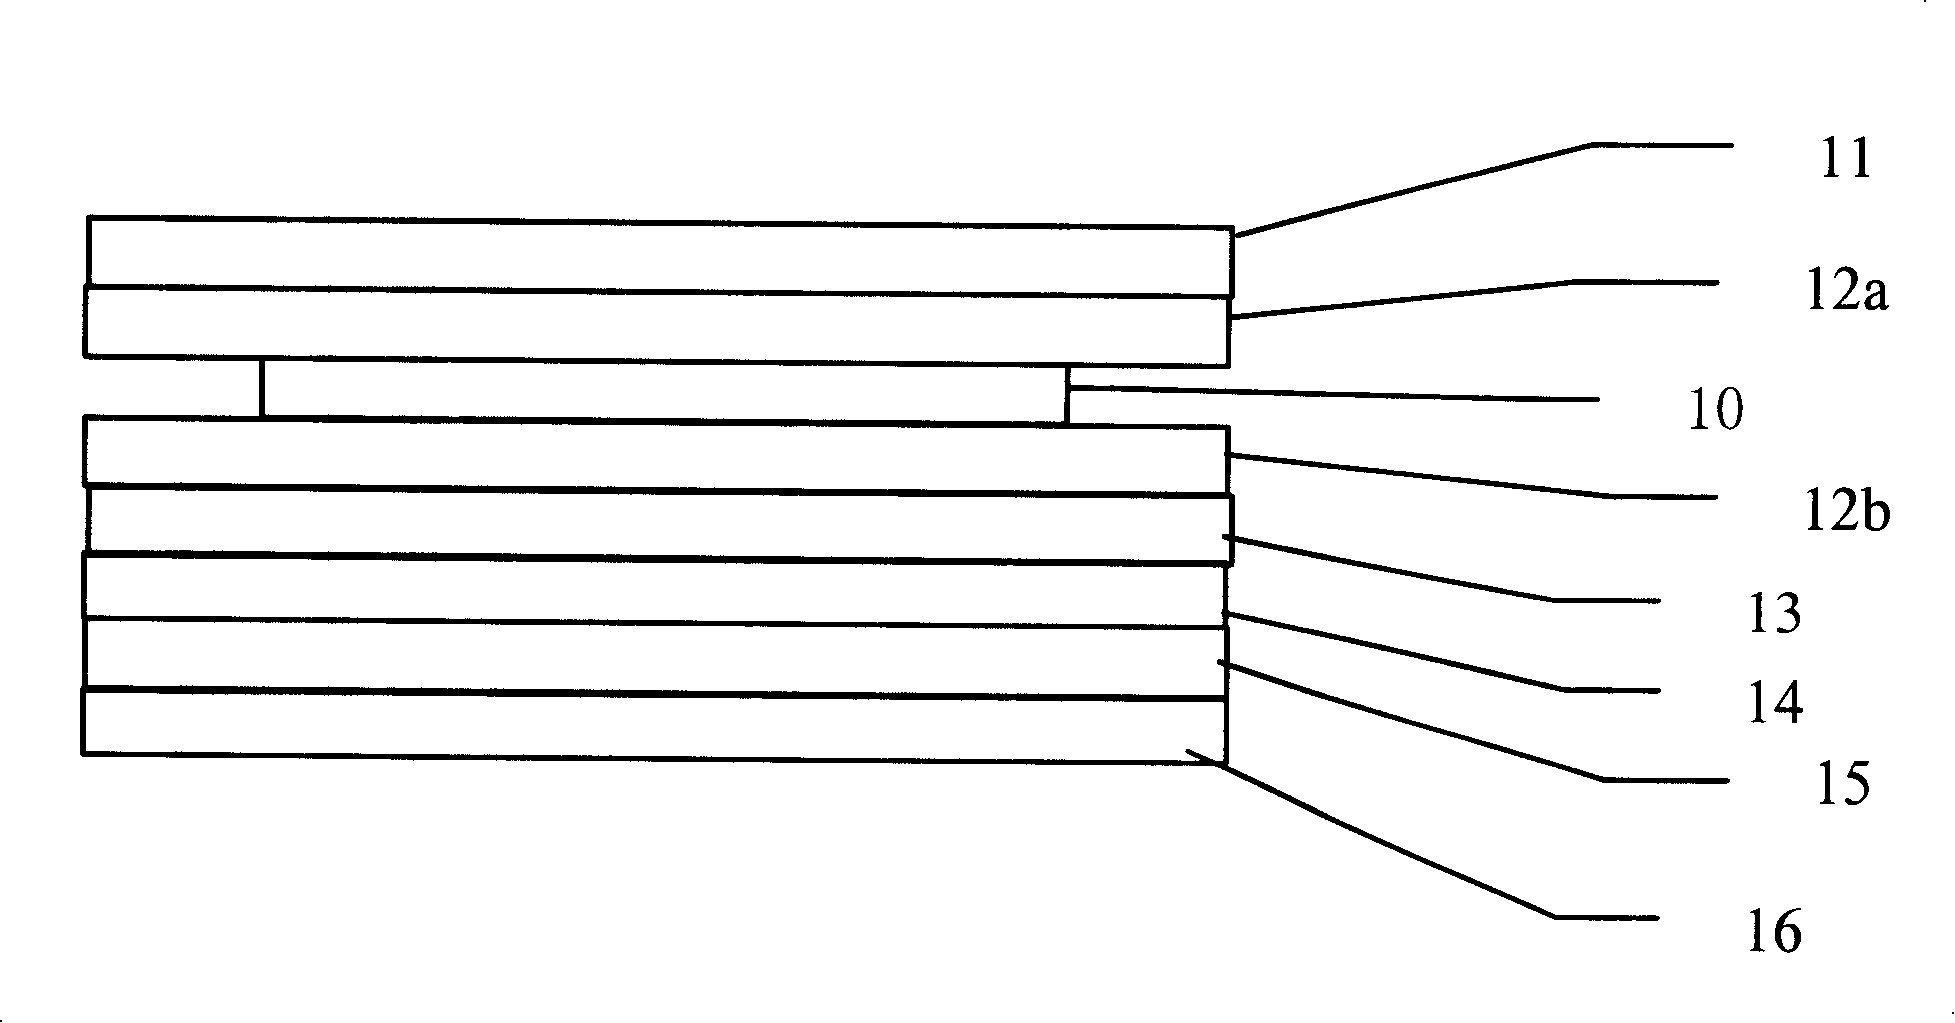 Flexible circuit board press bonding method